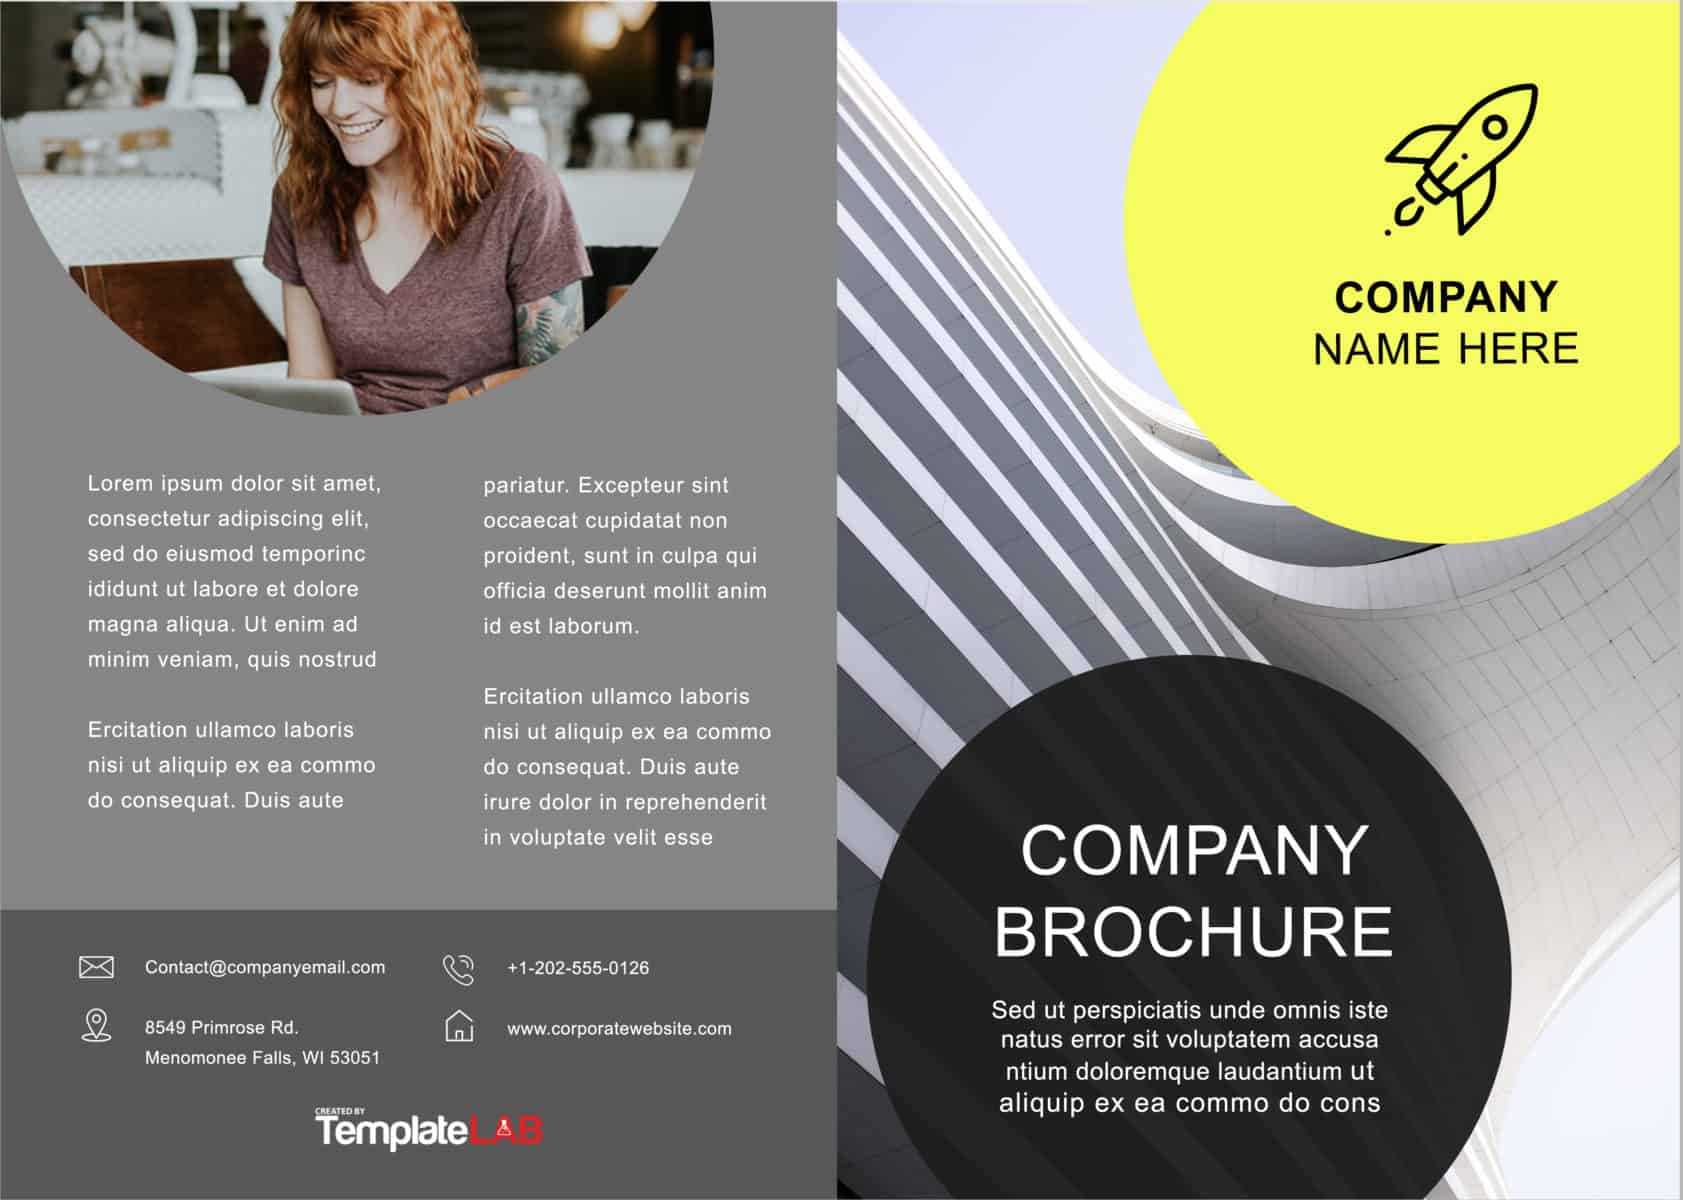 33 Free Brochure Templates (Word + Pdf) ᐅ Templatelab Inside Free Brochure Templates For Word 2010